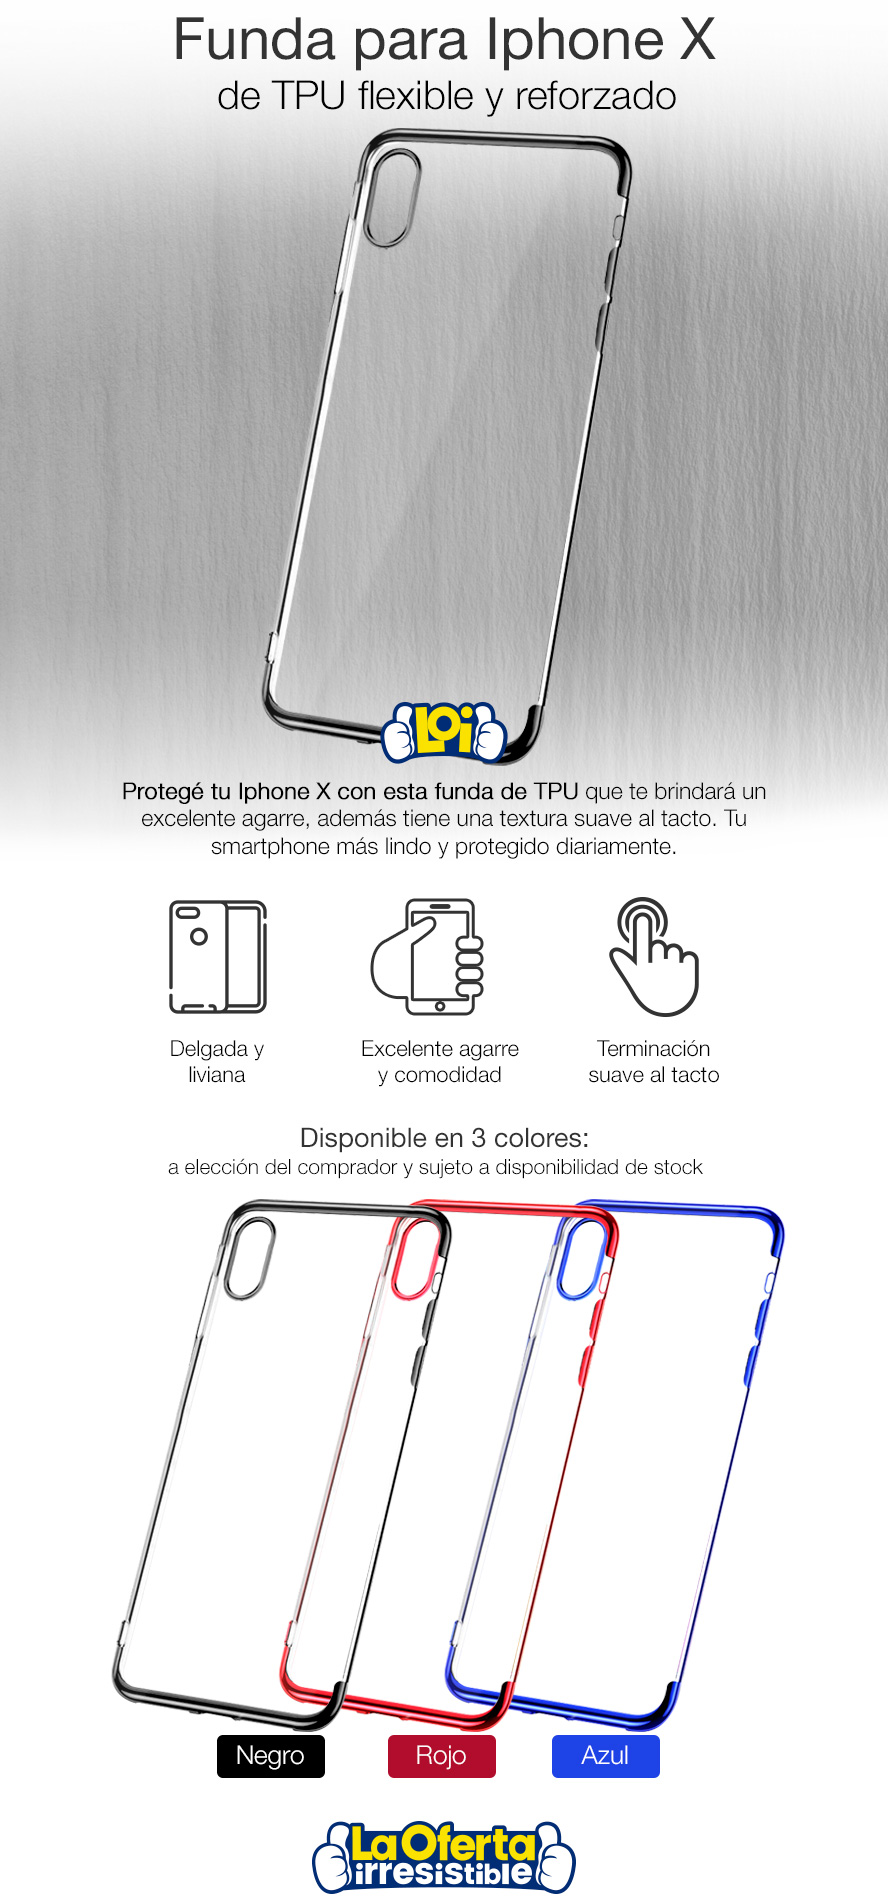 Funda Cover para Iphone XS Max en TPU Flexible y Reforzado - Negro, oferta  LOi.